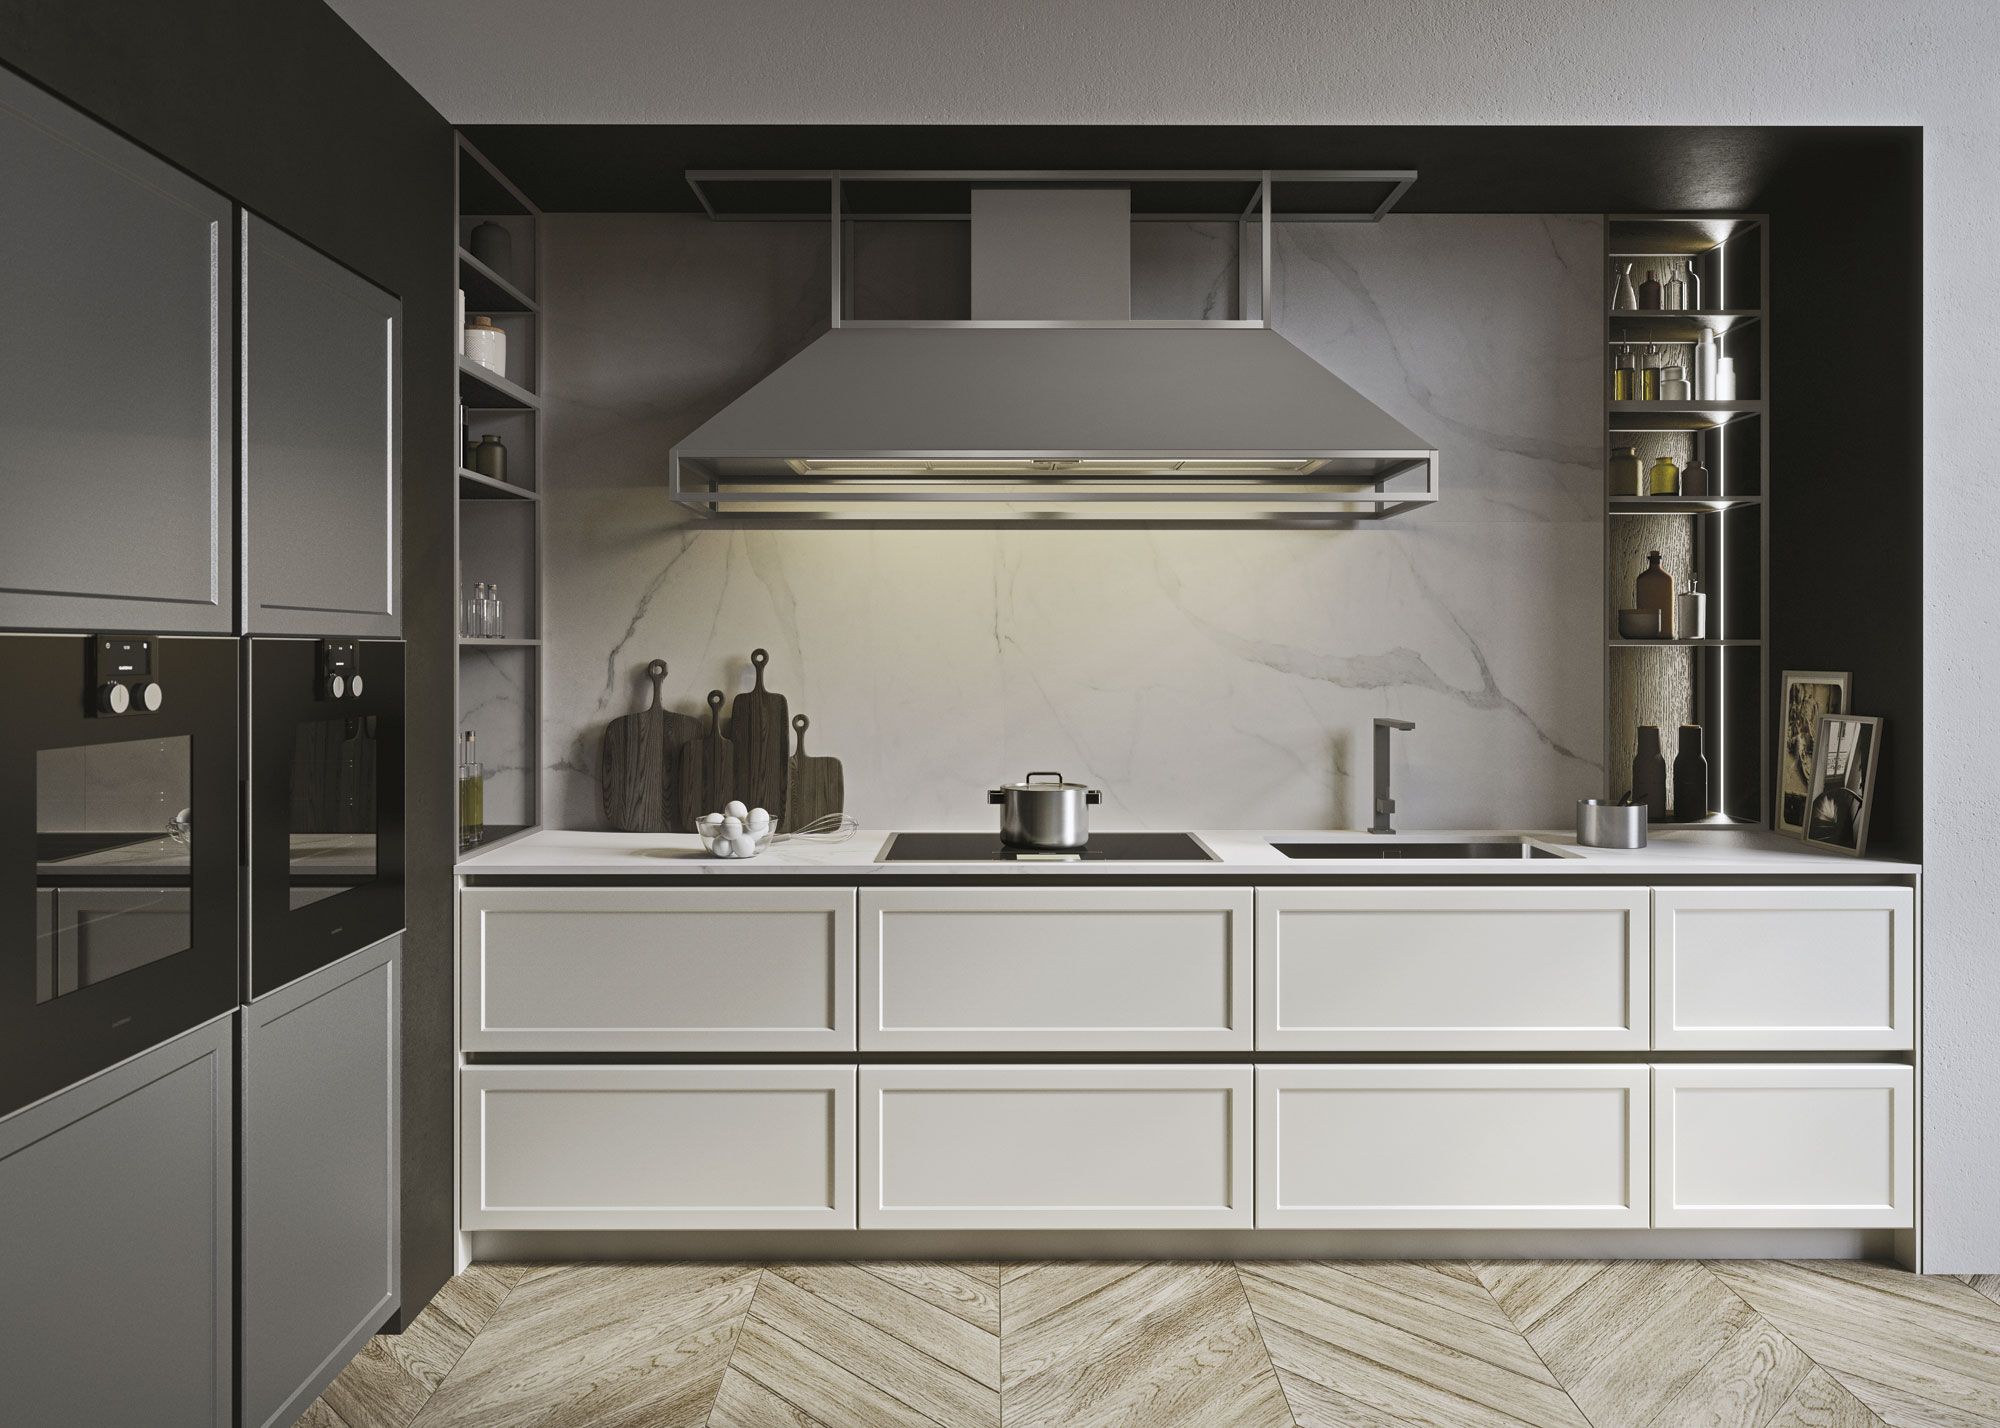 Italiaanse-design-keuken_cucine-moderne-frame-snaidero_Tieleman-Keukens_6.jpg